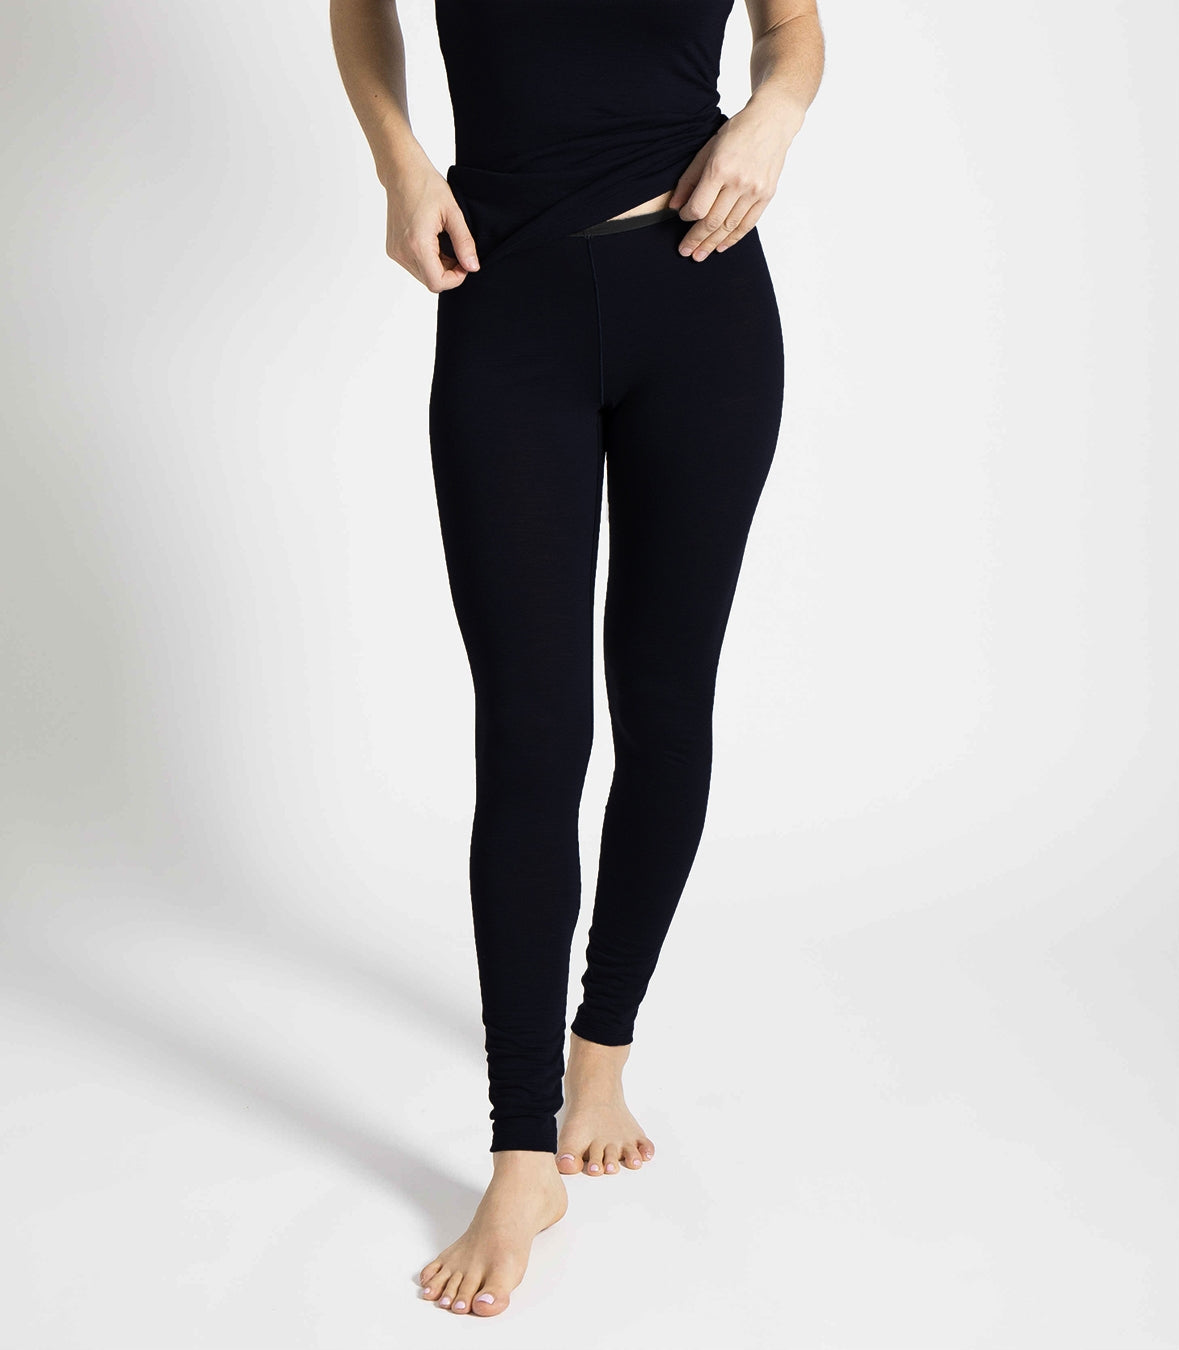 Women's Flat Knit Fleece Lined Tights - A New Day™ Black L/XL